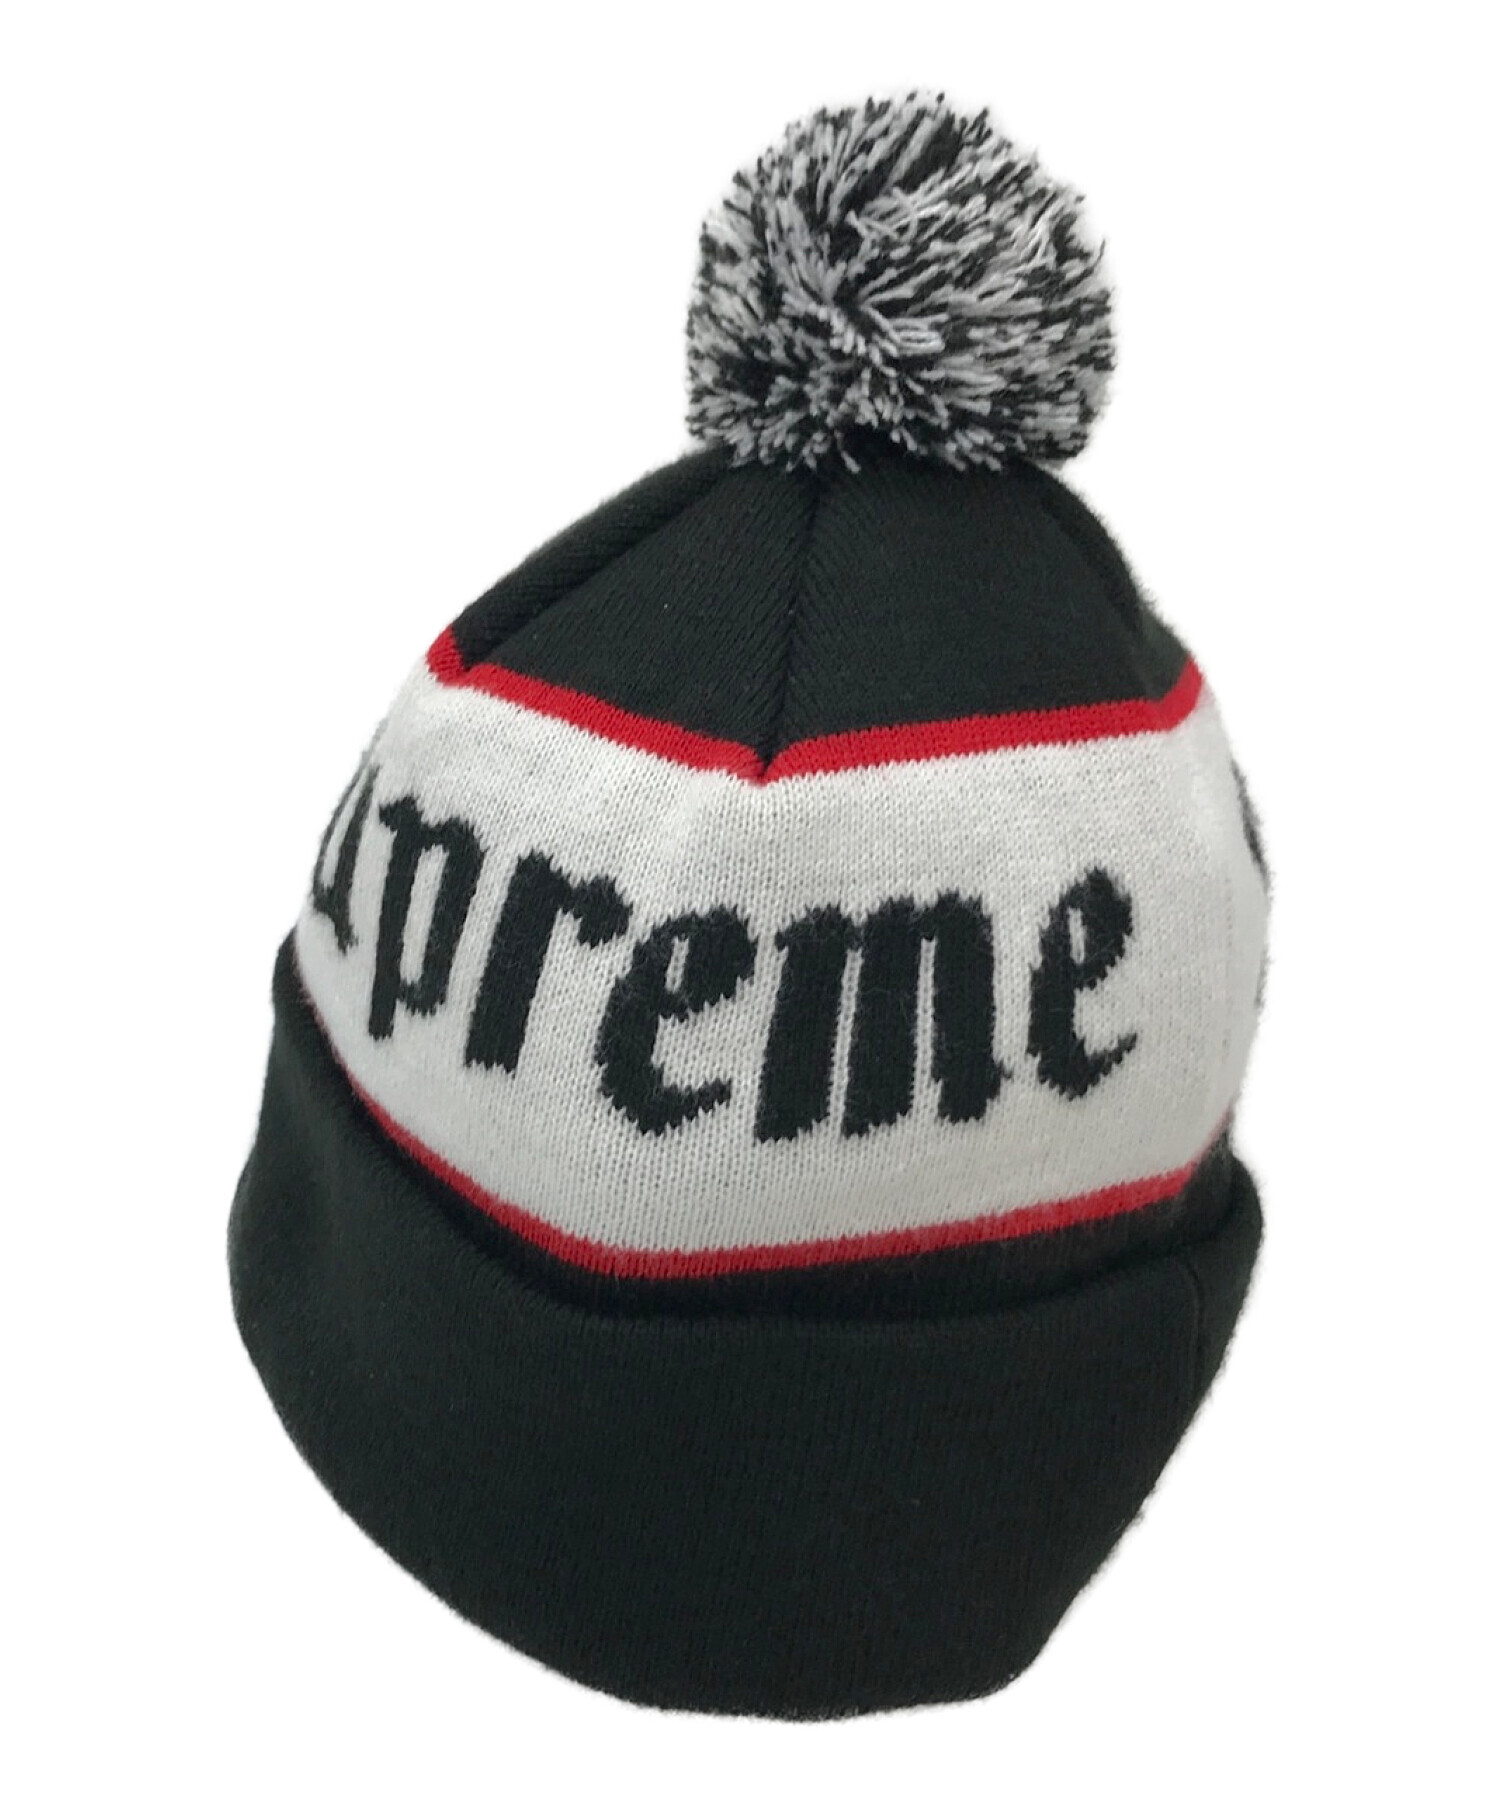 lastsupreme alpine Beanie black ボンボンニット帽 - 帽子